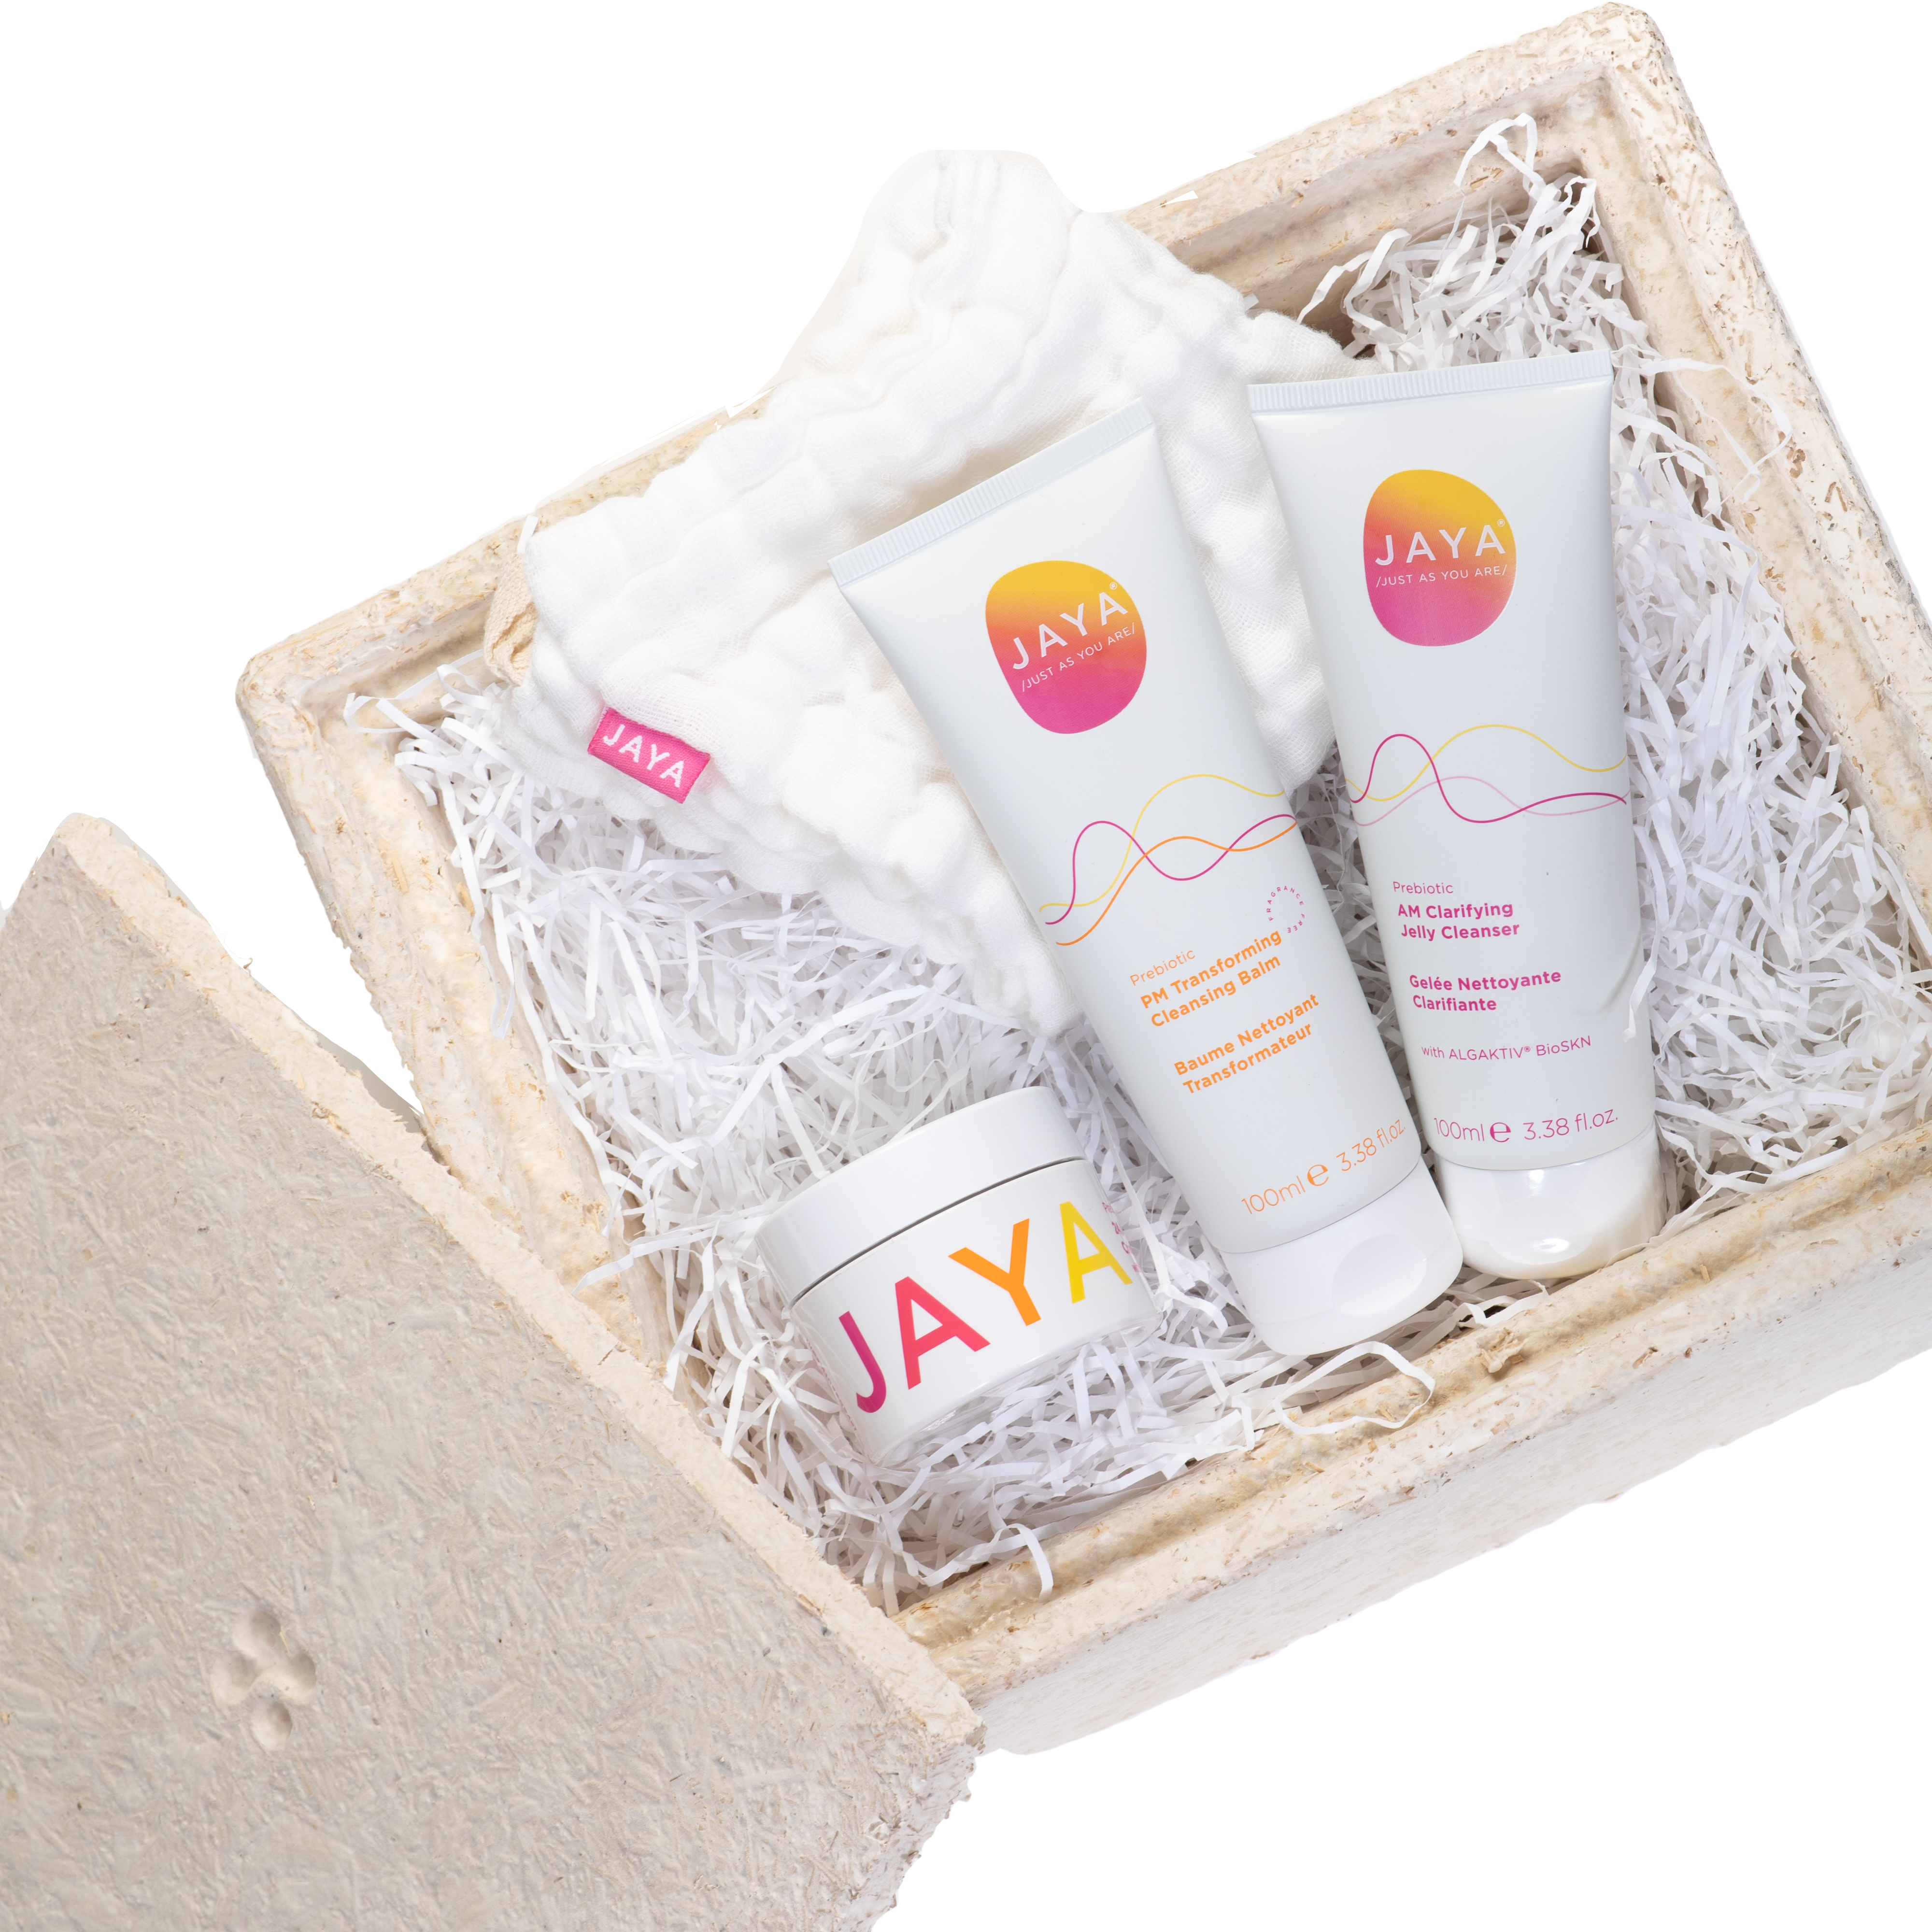 JAYA Beauty product gift set